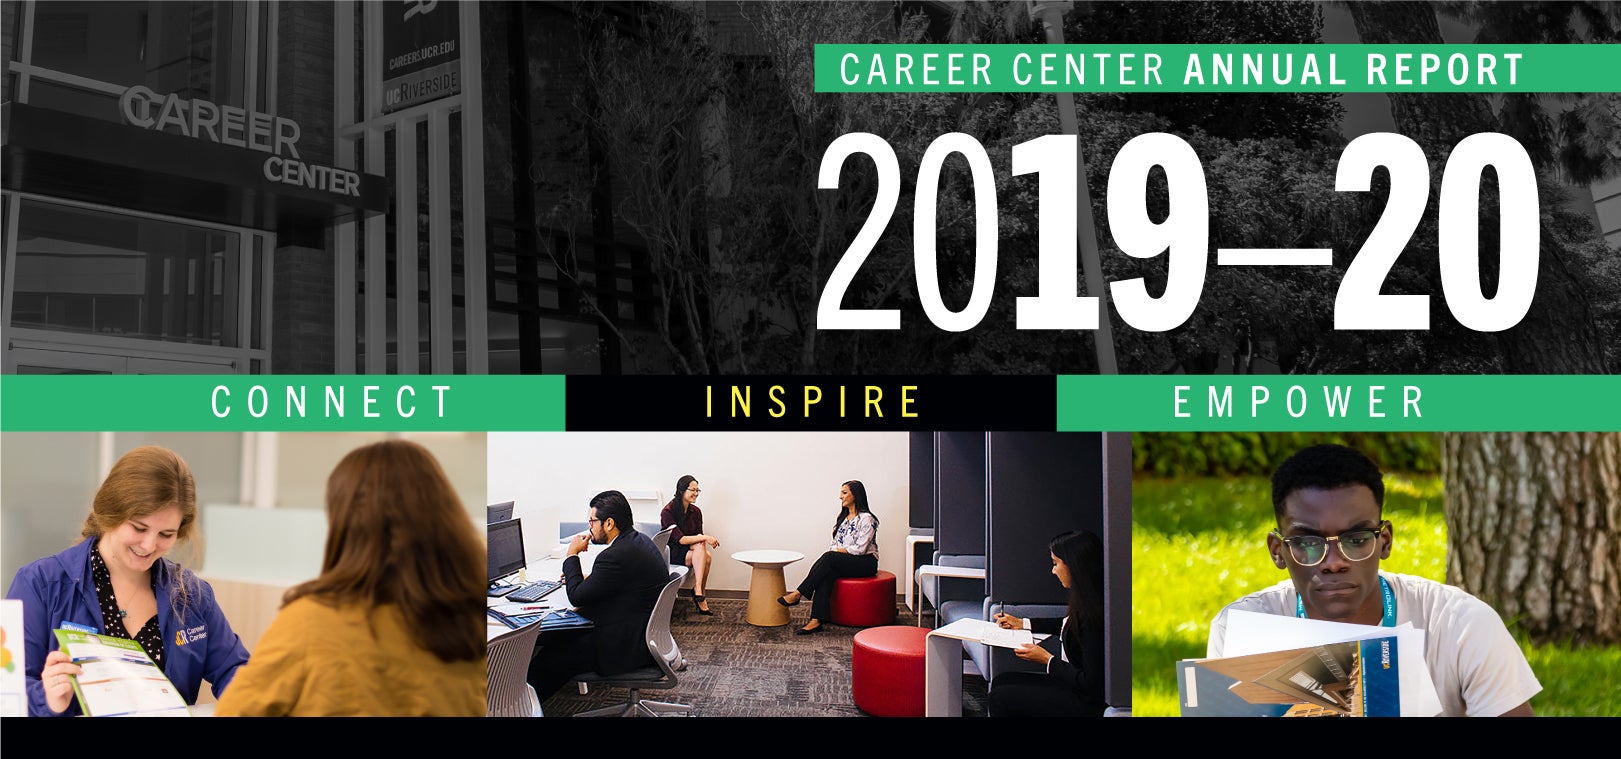 Career Center Annual Report, 2019-20 